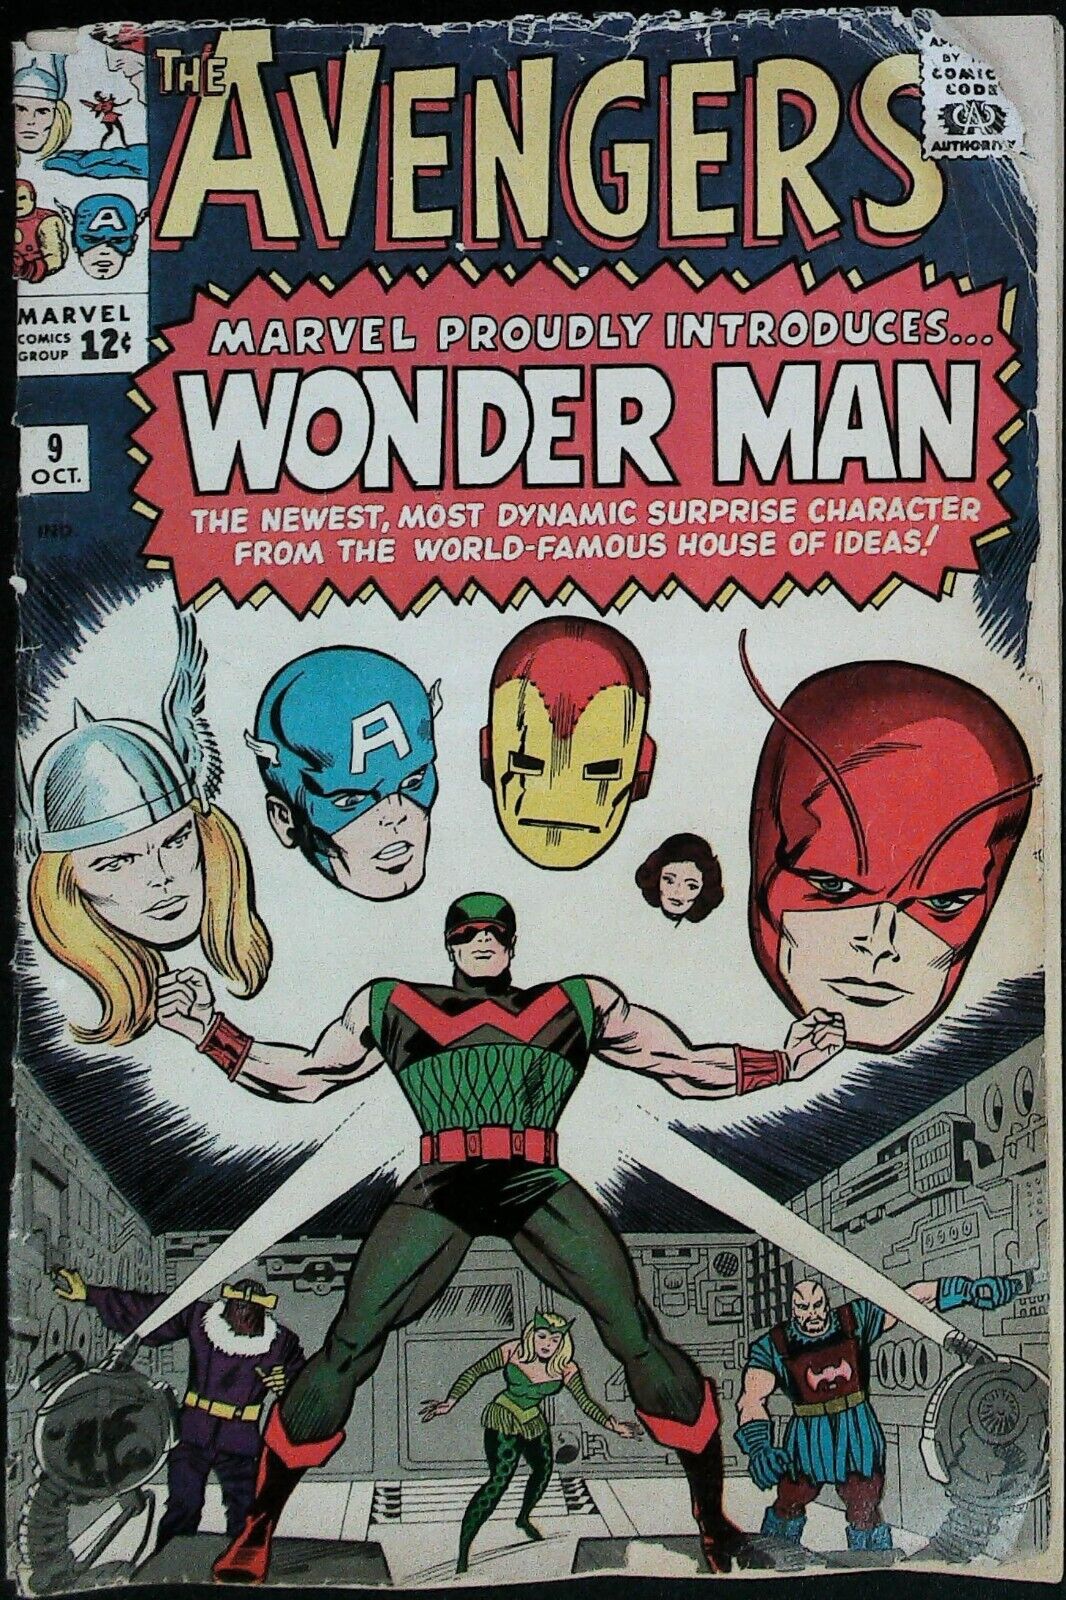 Avengers #9 Vol 1 (1964) KEY *1st Appearance of Wonder Man* - Good